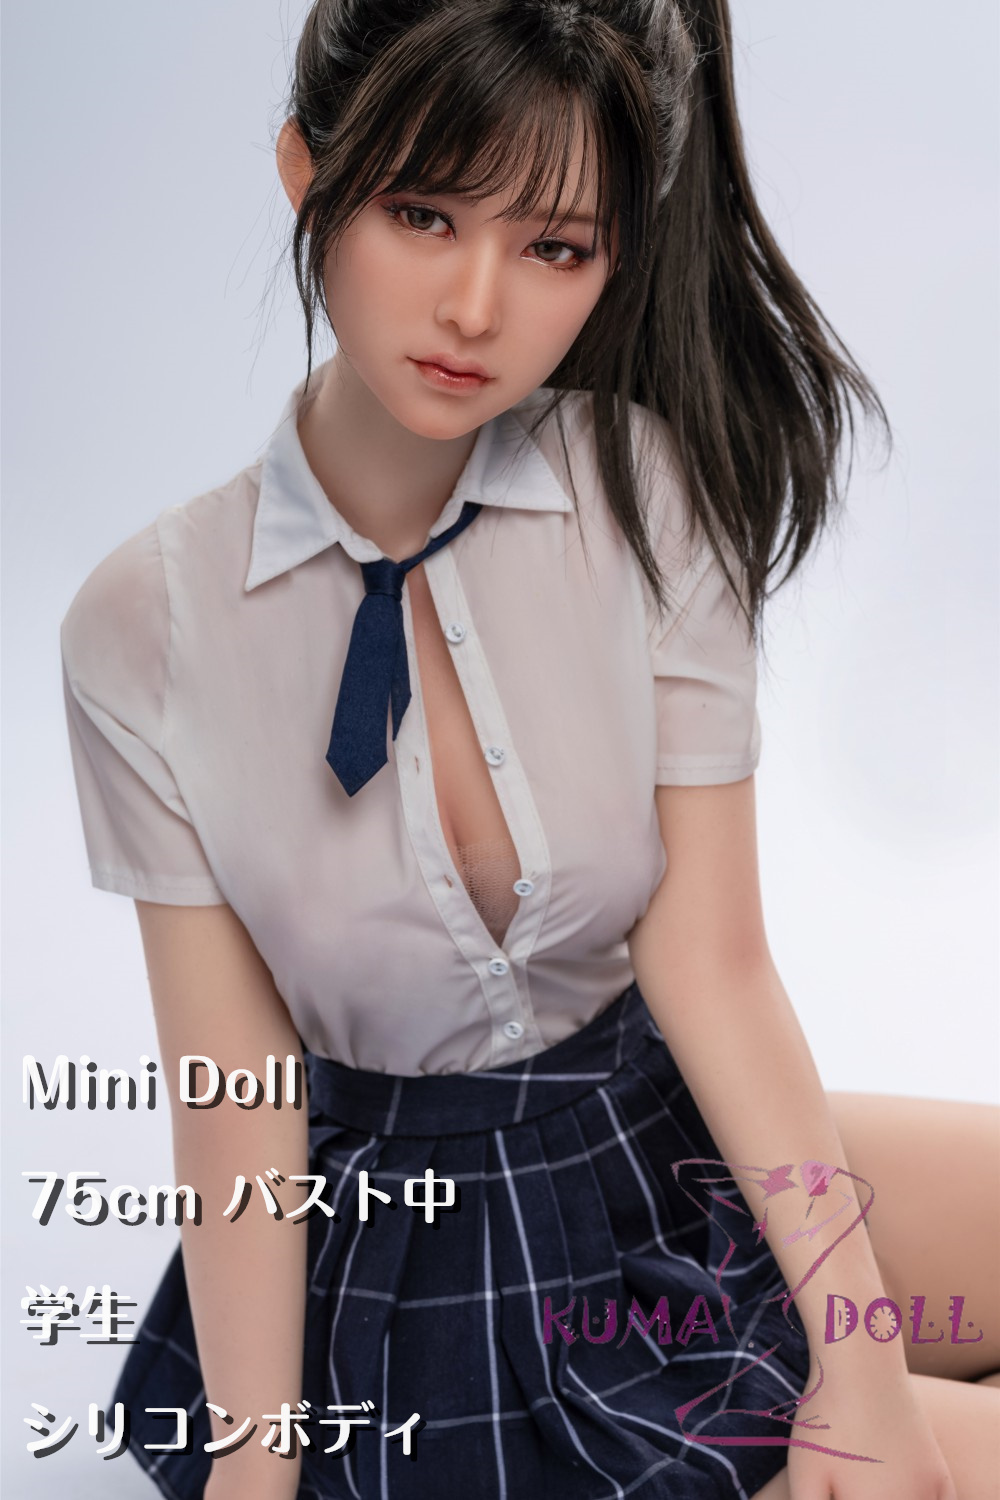 Minidoll 75cm 学生 小型ラブドール シリコン材質 ミニドール 4.6kg 塗装済みフィギュア セックス可能 ボディ選択可能 Cospaly衣装+スタンド 選択可能